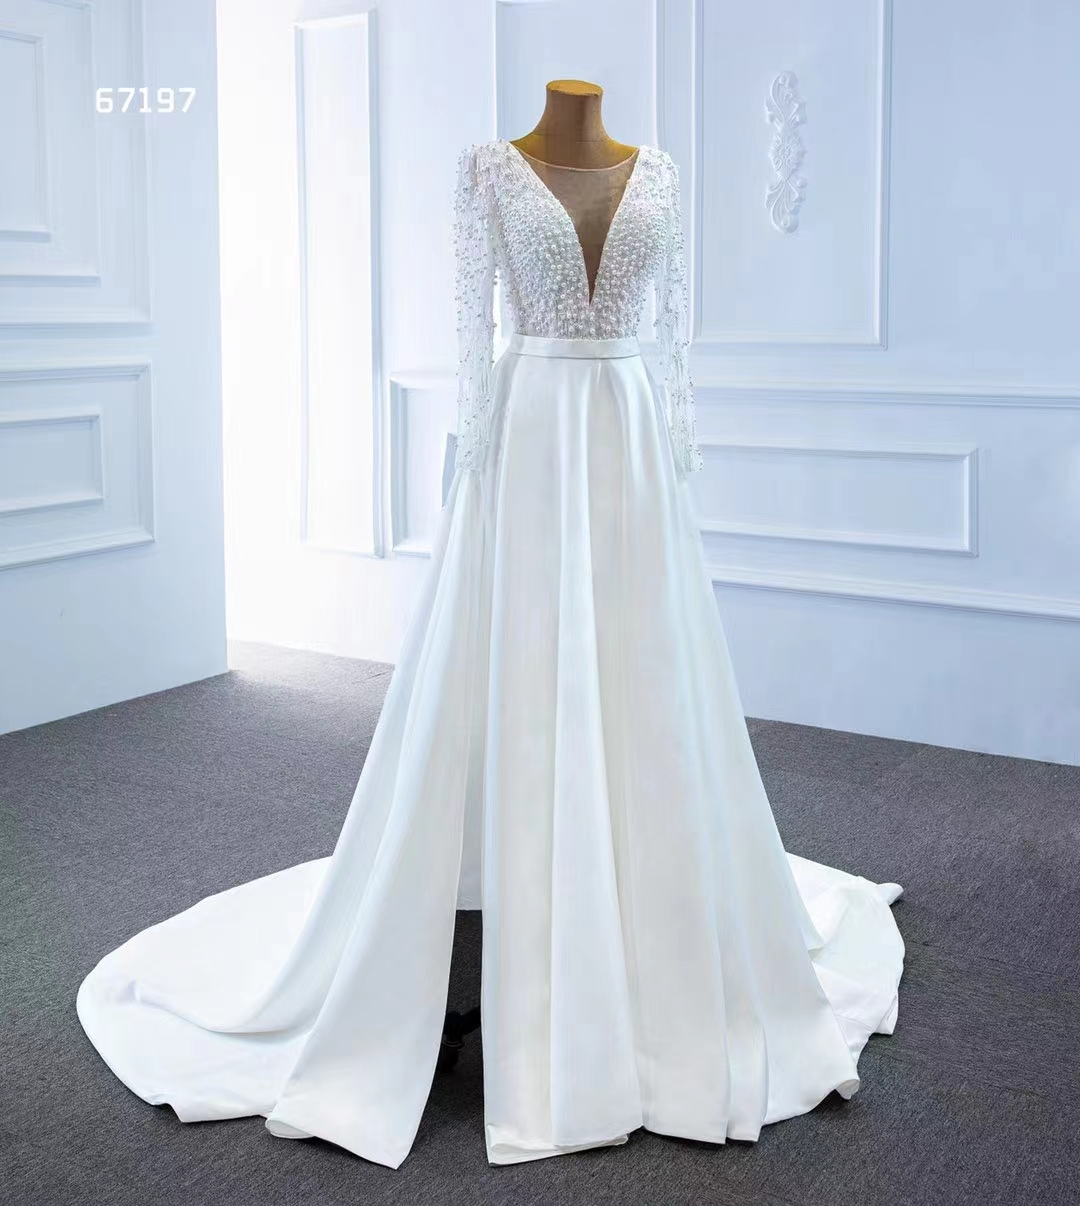 Elegant Wedding Dress Fabrics Beaded And Sequins Bridal Gowns SM67197